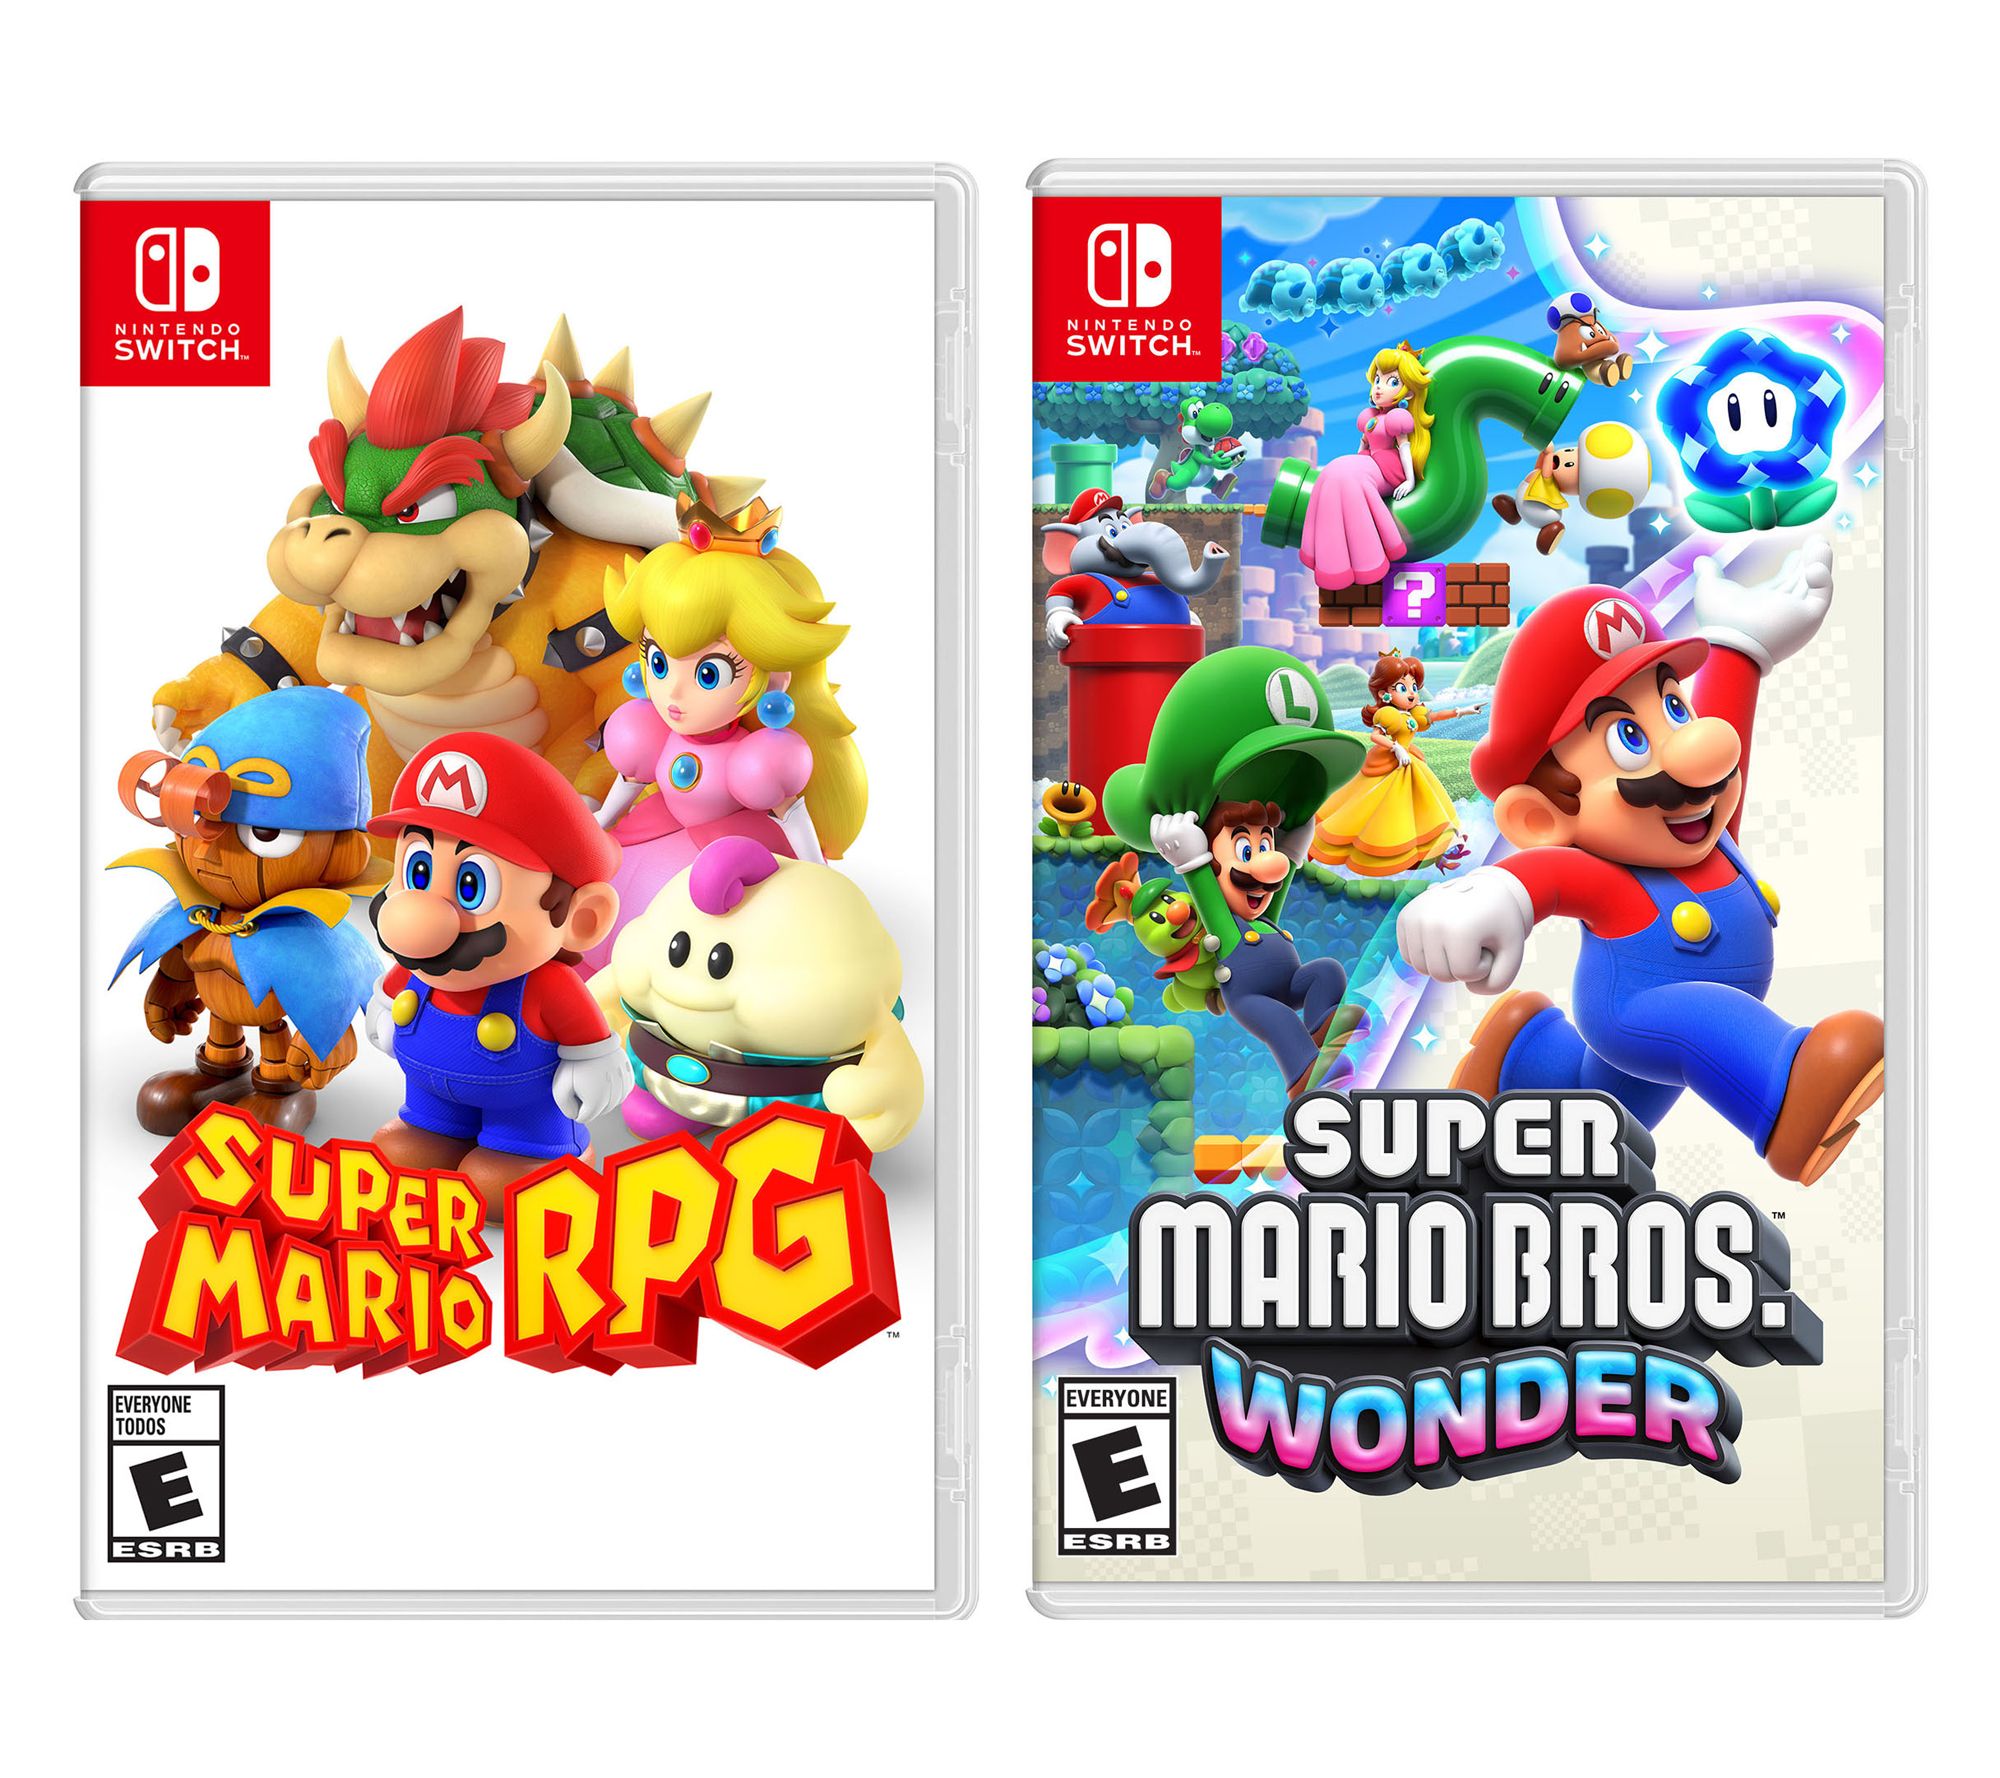 Super Mario Party + Super Mario Odyssey - Two Game Bundle - Nintendo Switch  